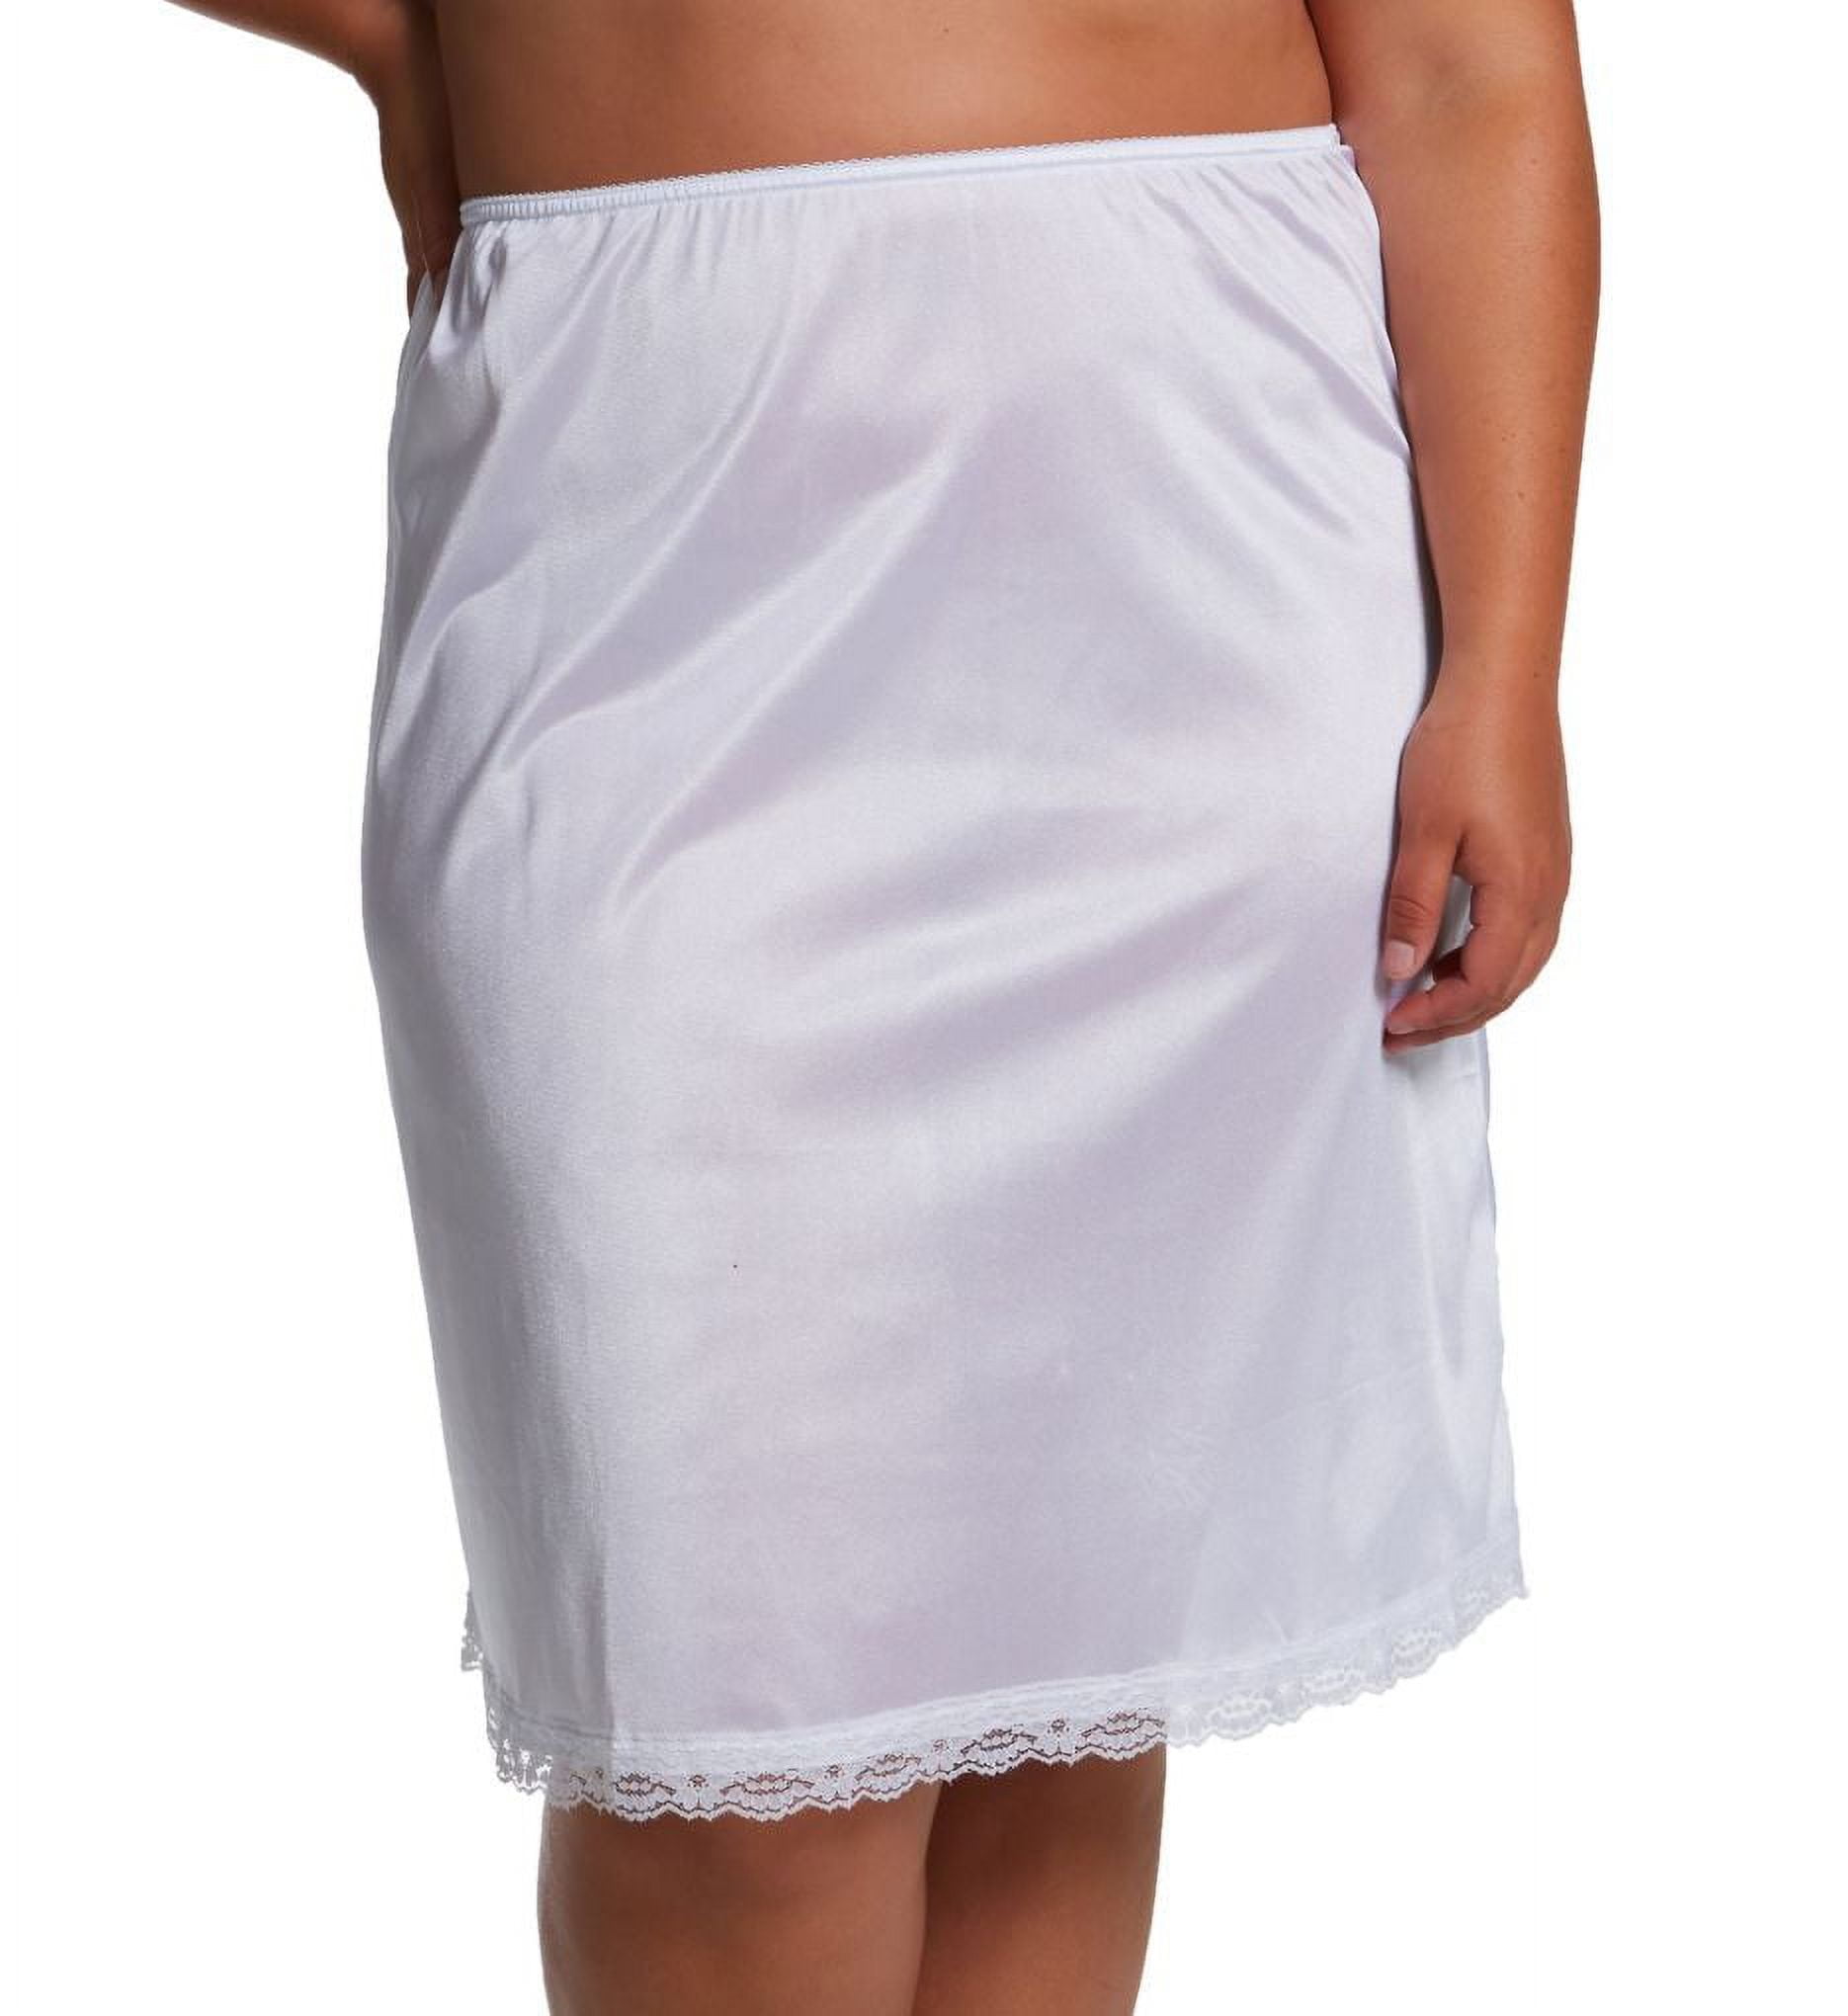 InstantFigure Women’s Firm Control High-Waist Shaping and Slimming Slip  Skirt